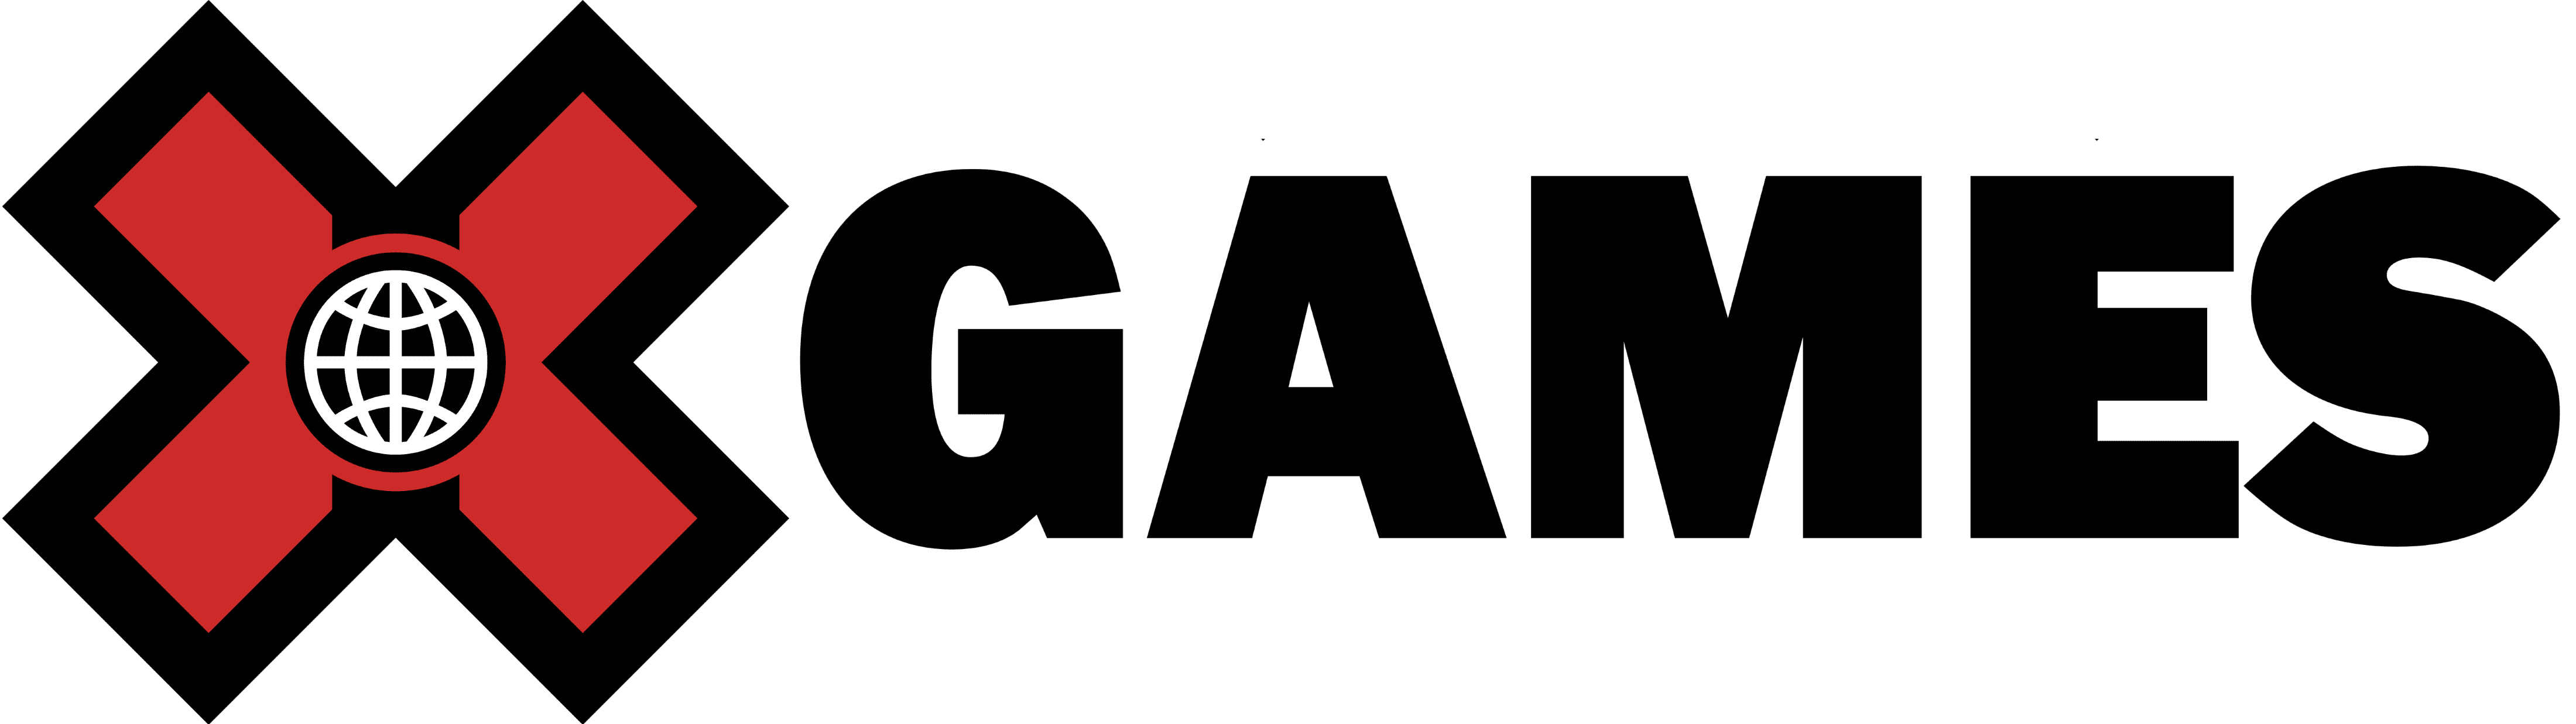 X_Games_logo_logotipo.png